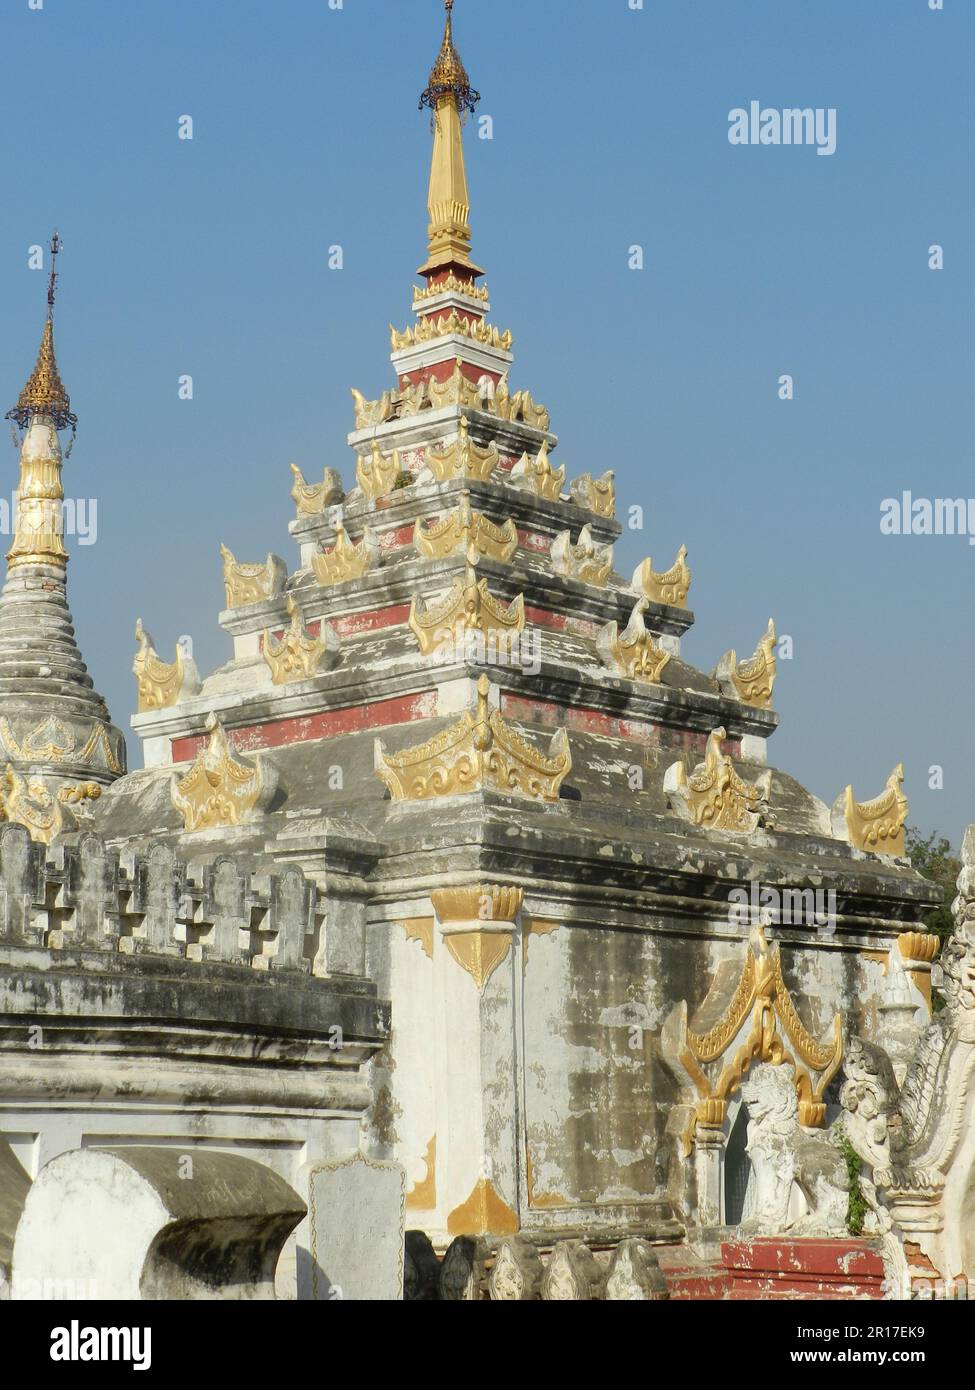 Myanmar, Mandalay, Inwa: Ein schöner terrassenförmiger Turm des Maha Aung Mye Bonzan Kyaung (Kloster), 1822 für Königin Meh Nu, Ehefrau von König Bagyidaw, erbaut. Stockfoto